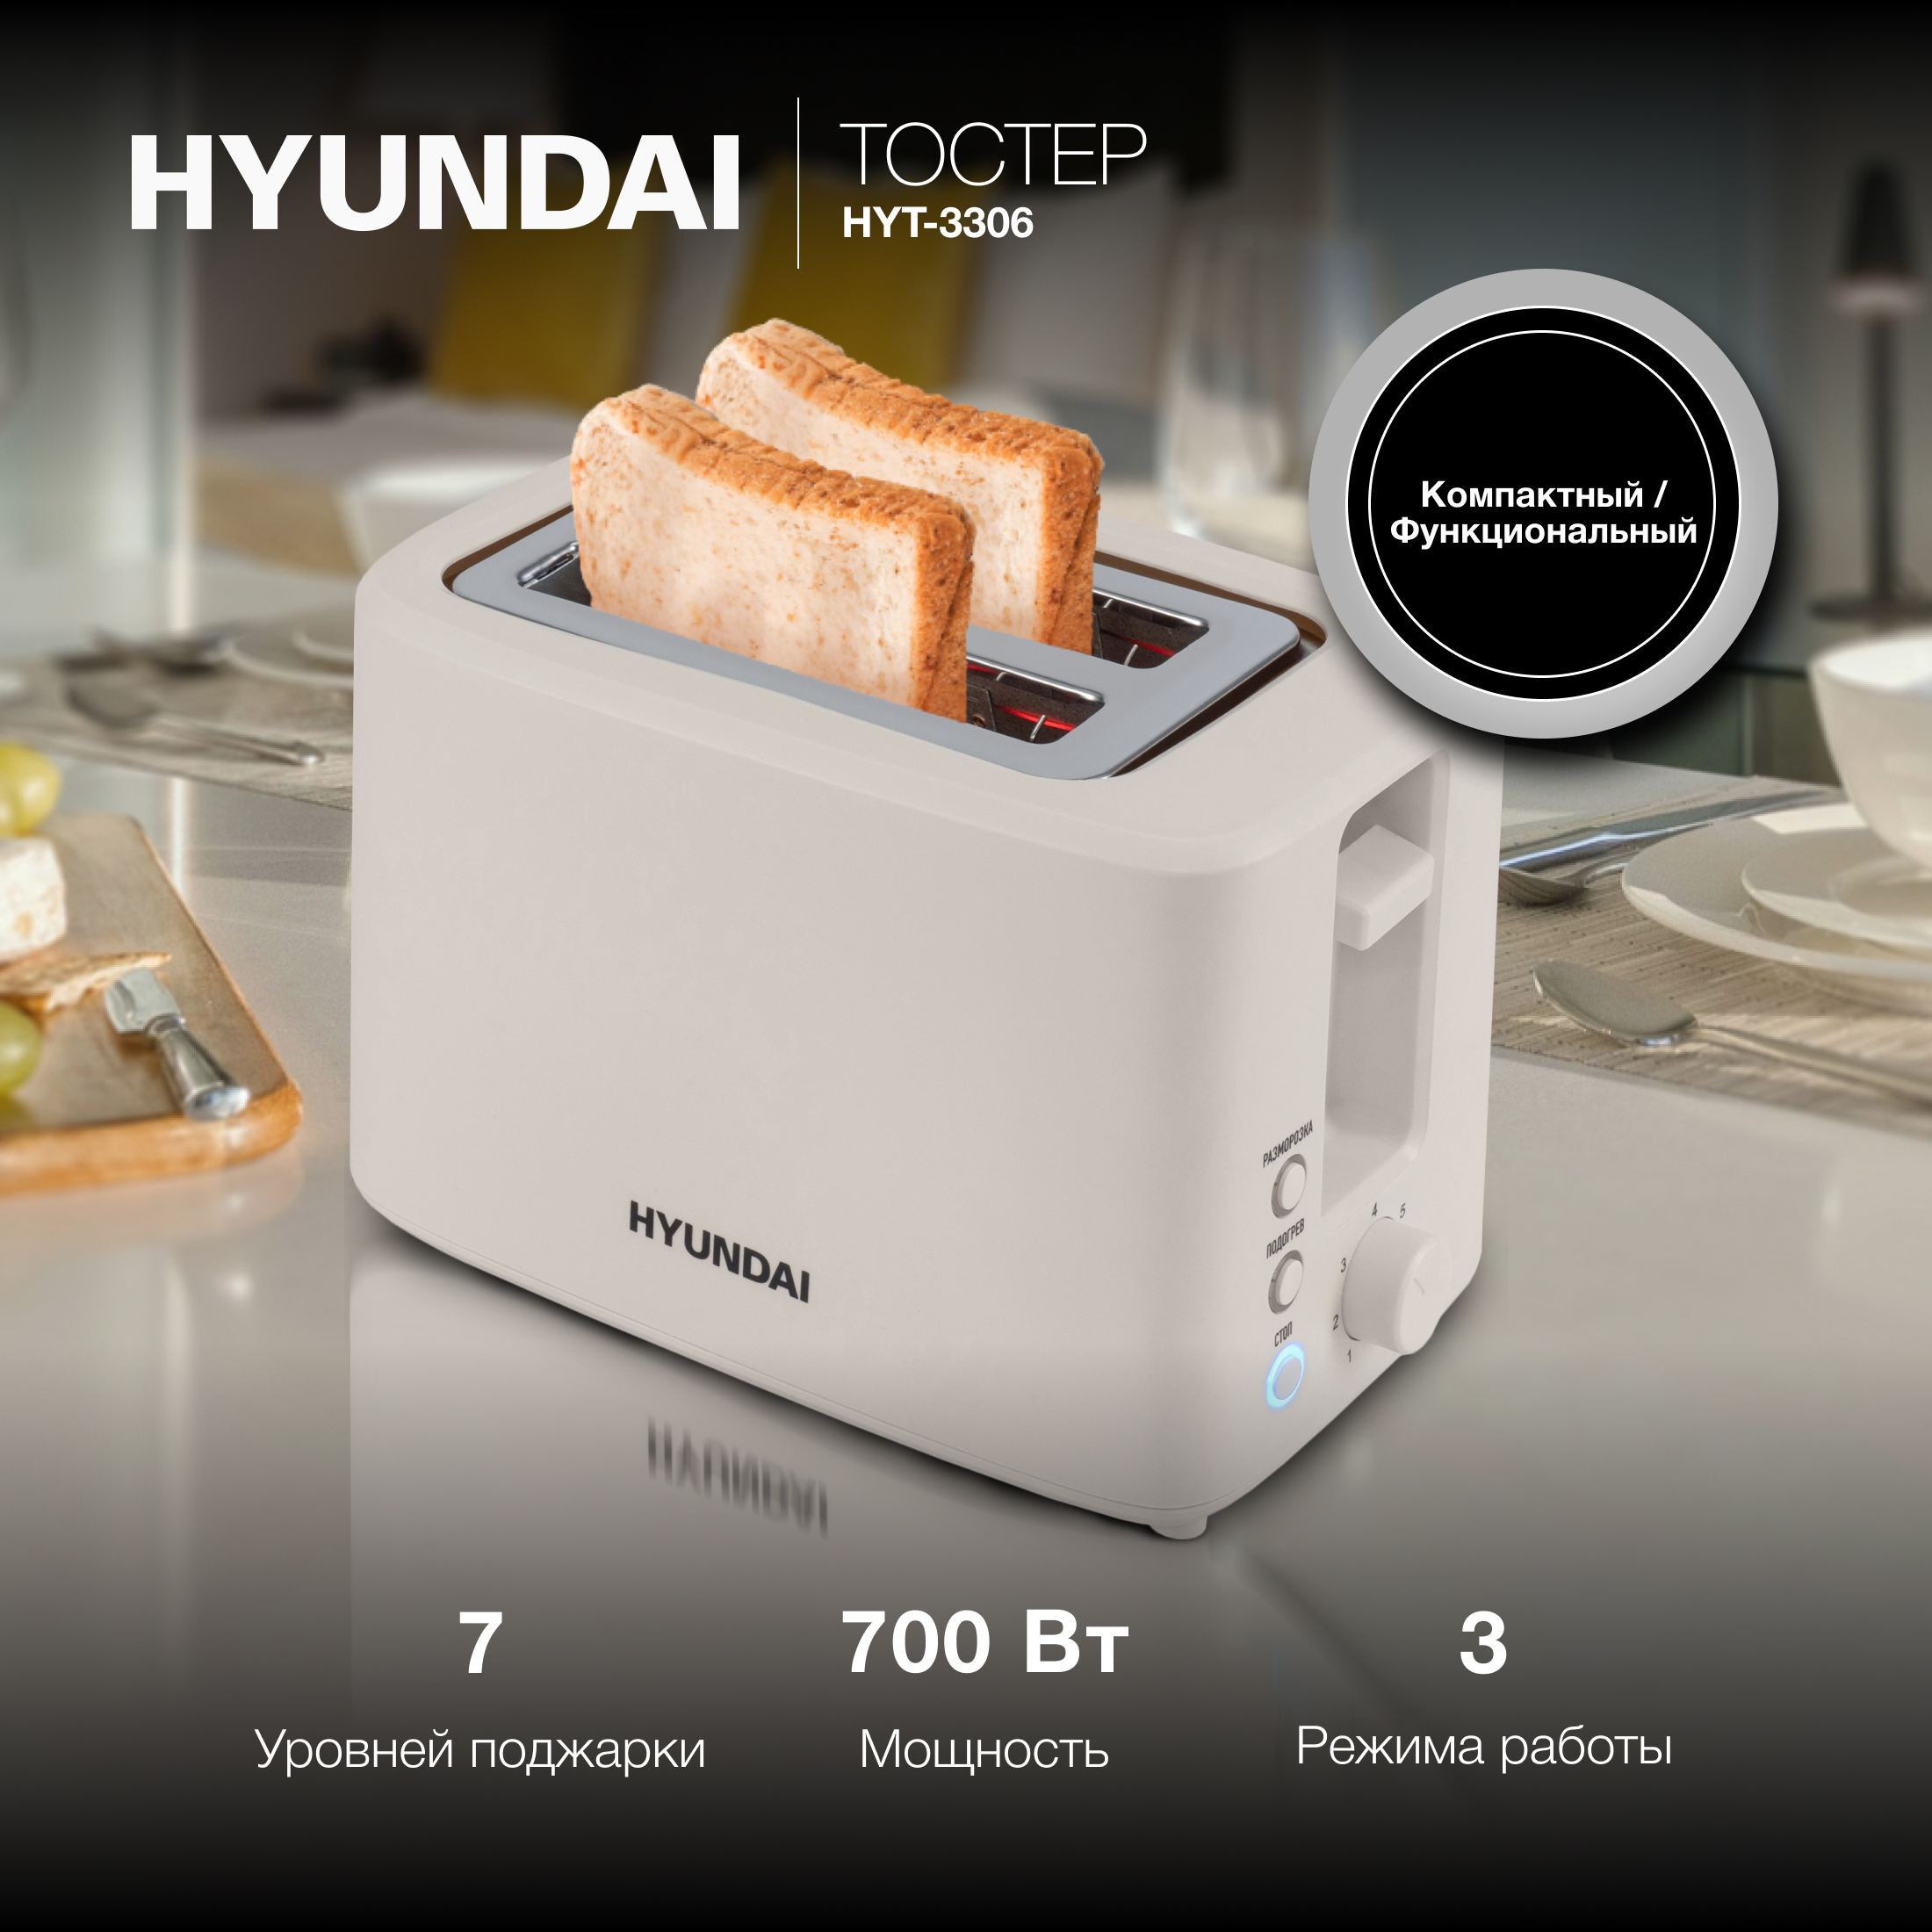 Тостер HYUNDAI HYT-3306 бежевый тостер hyundai hyt 8007 700вт